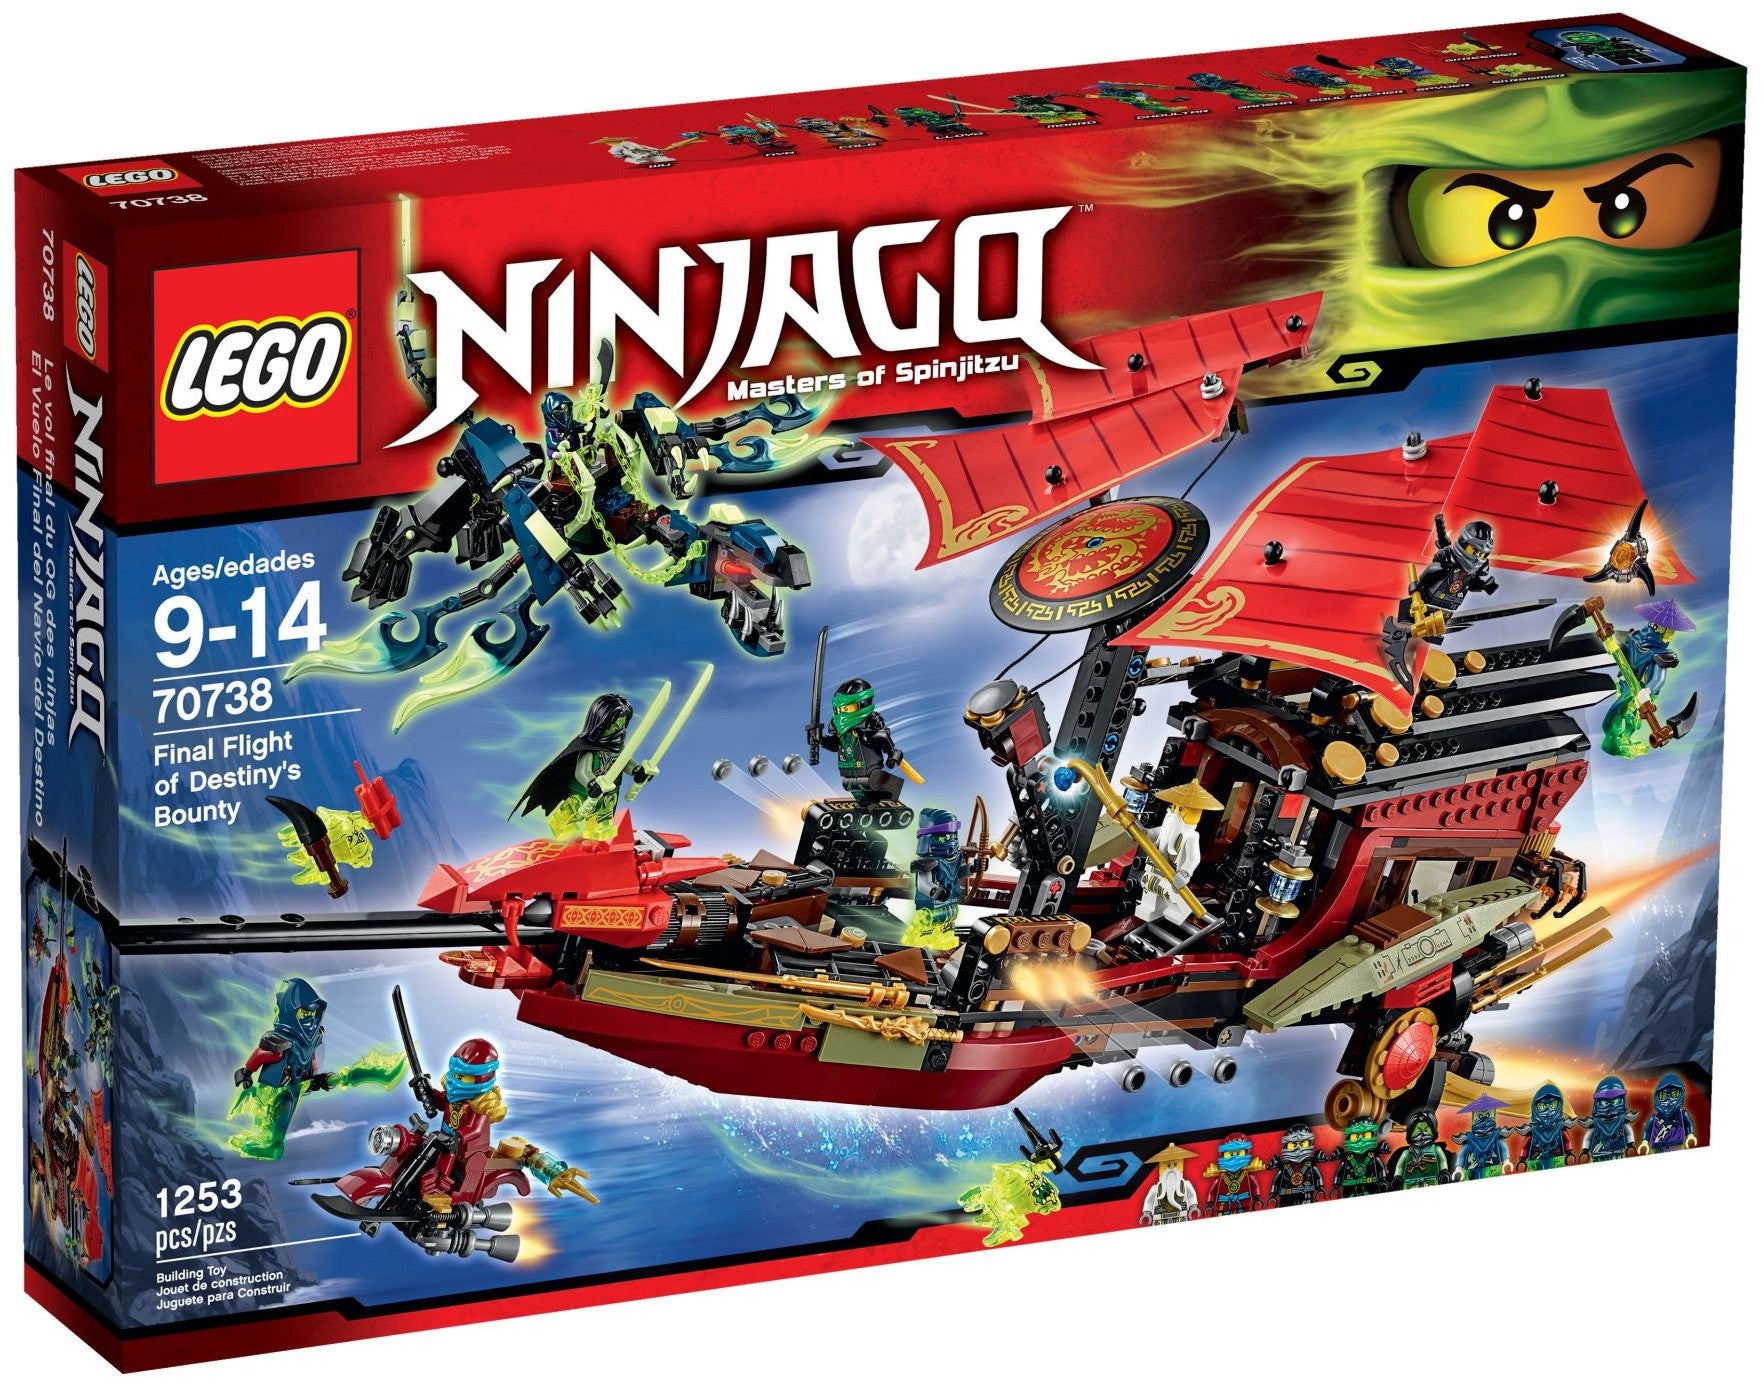 Lego Ninjago 70738 - Final Flight of Destiny's Bounty